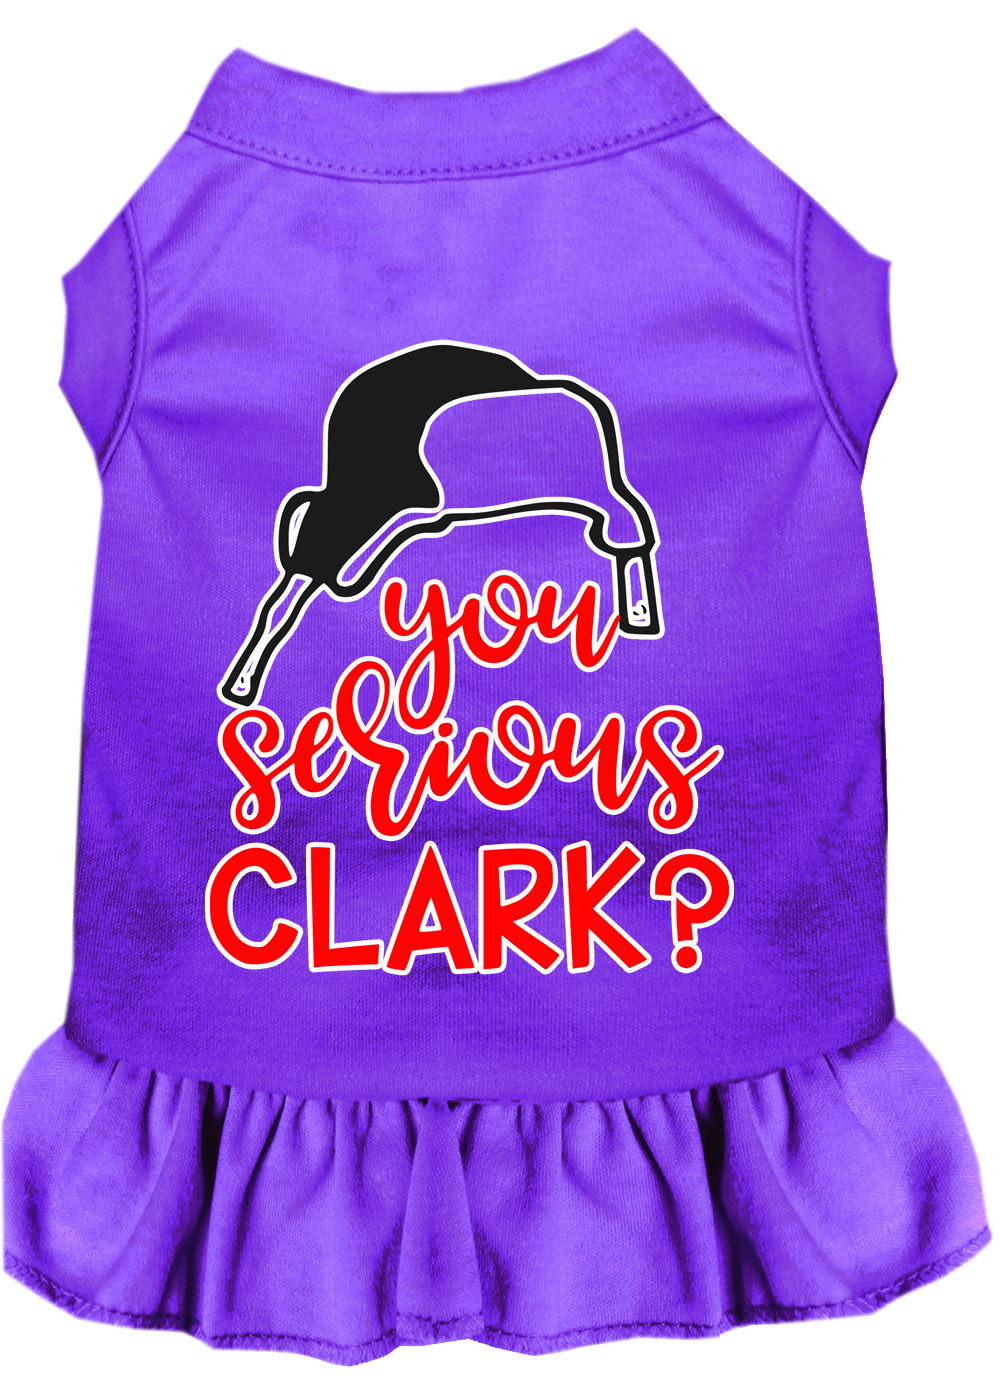 You Serious Clark? Screen Print Dog Dress Purple Med